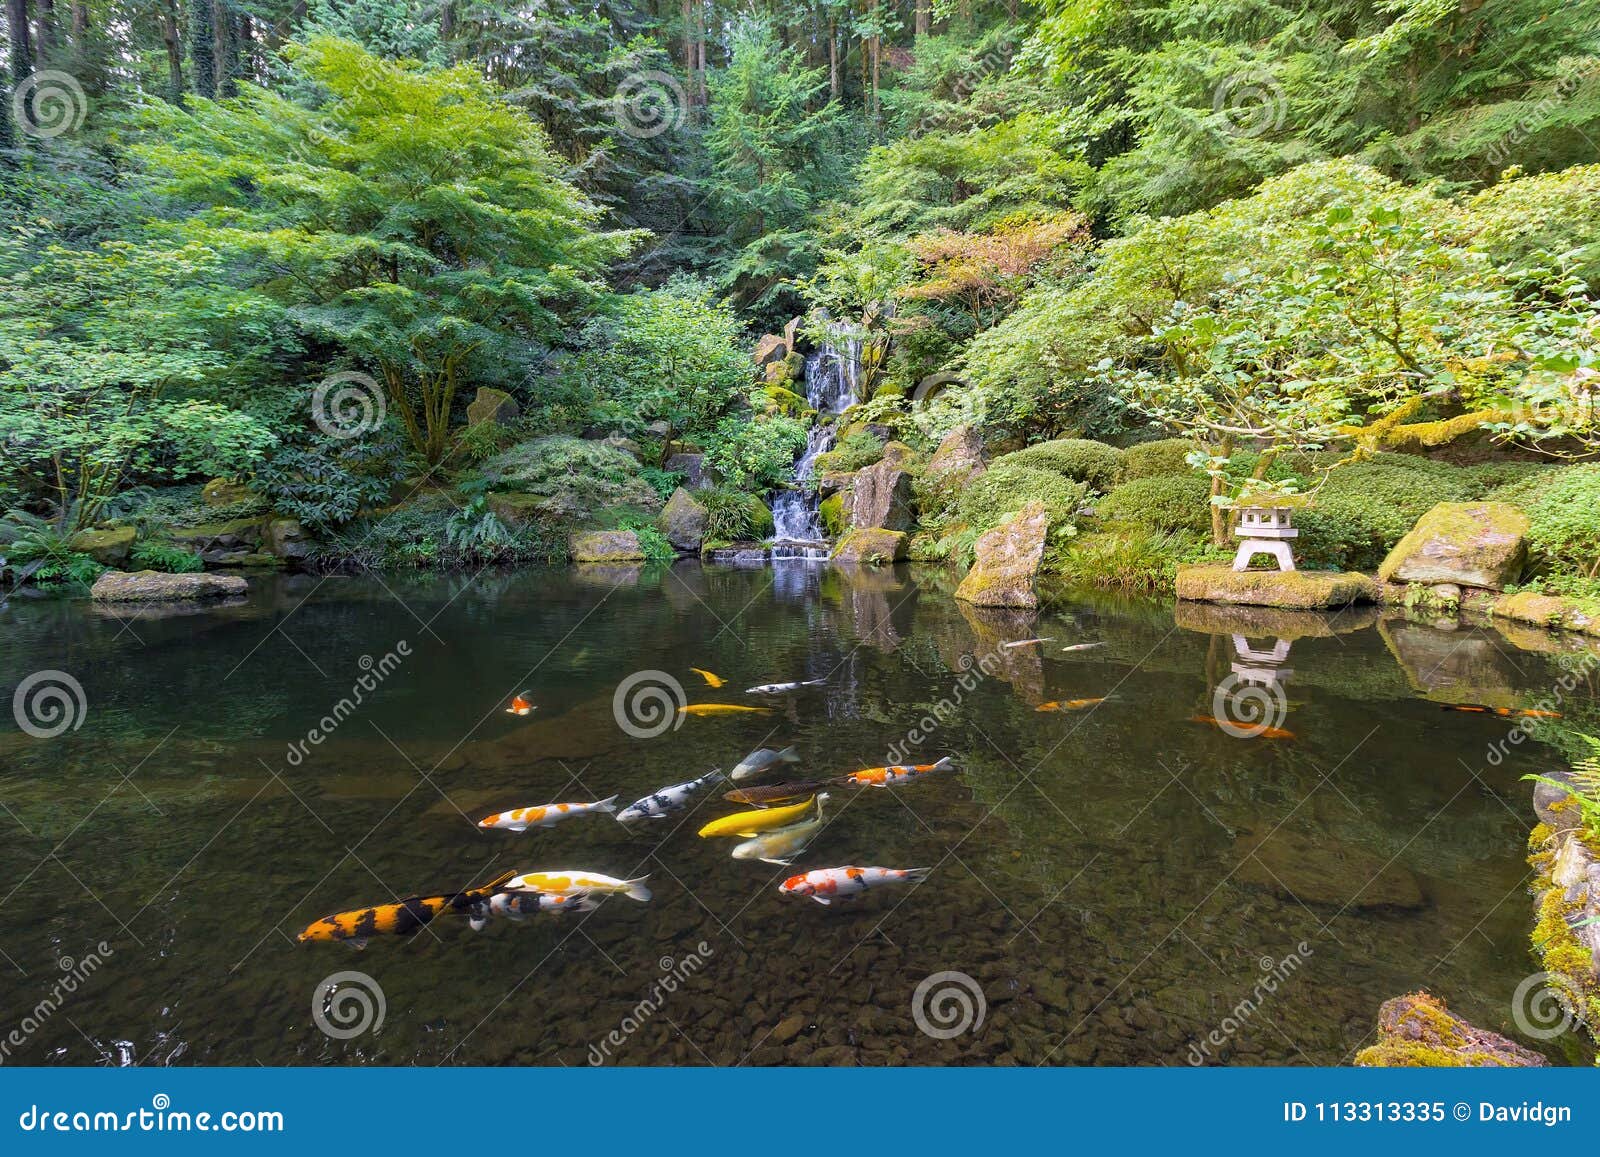 koi fish in waterfall pond at japanese garden